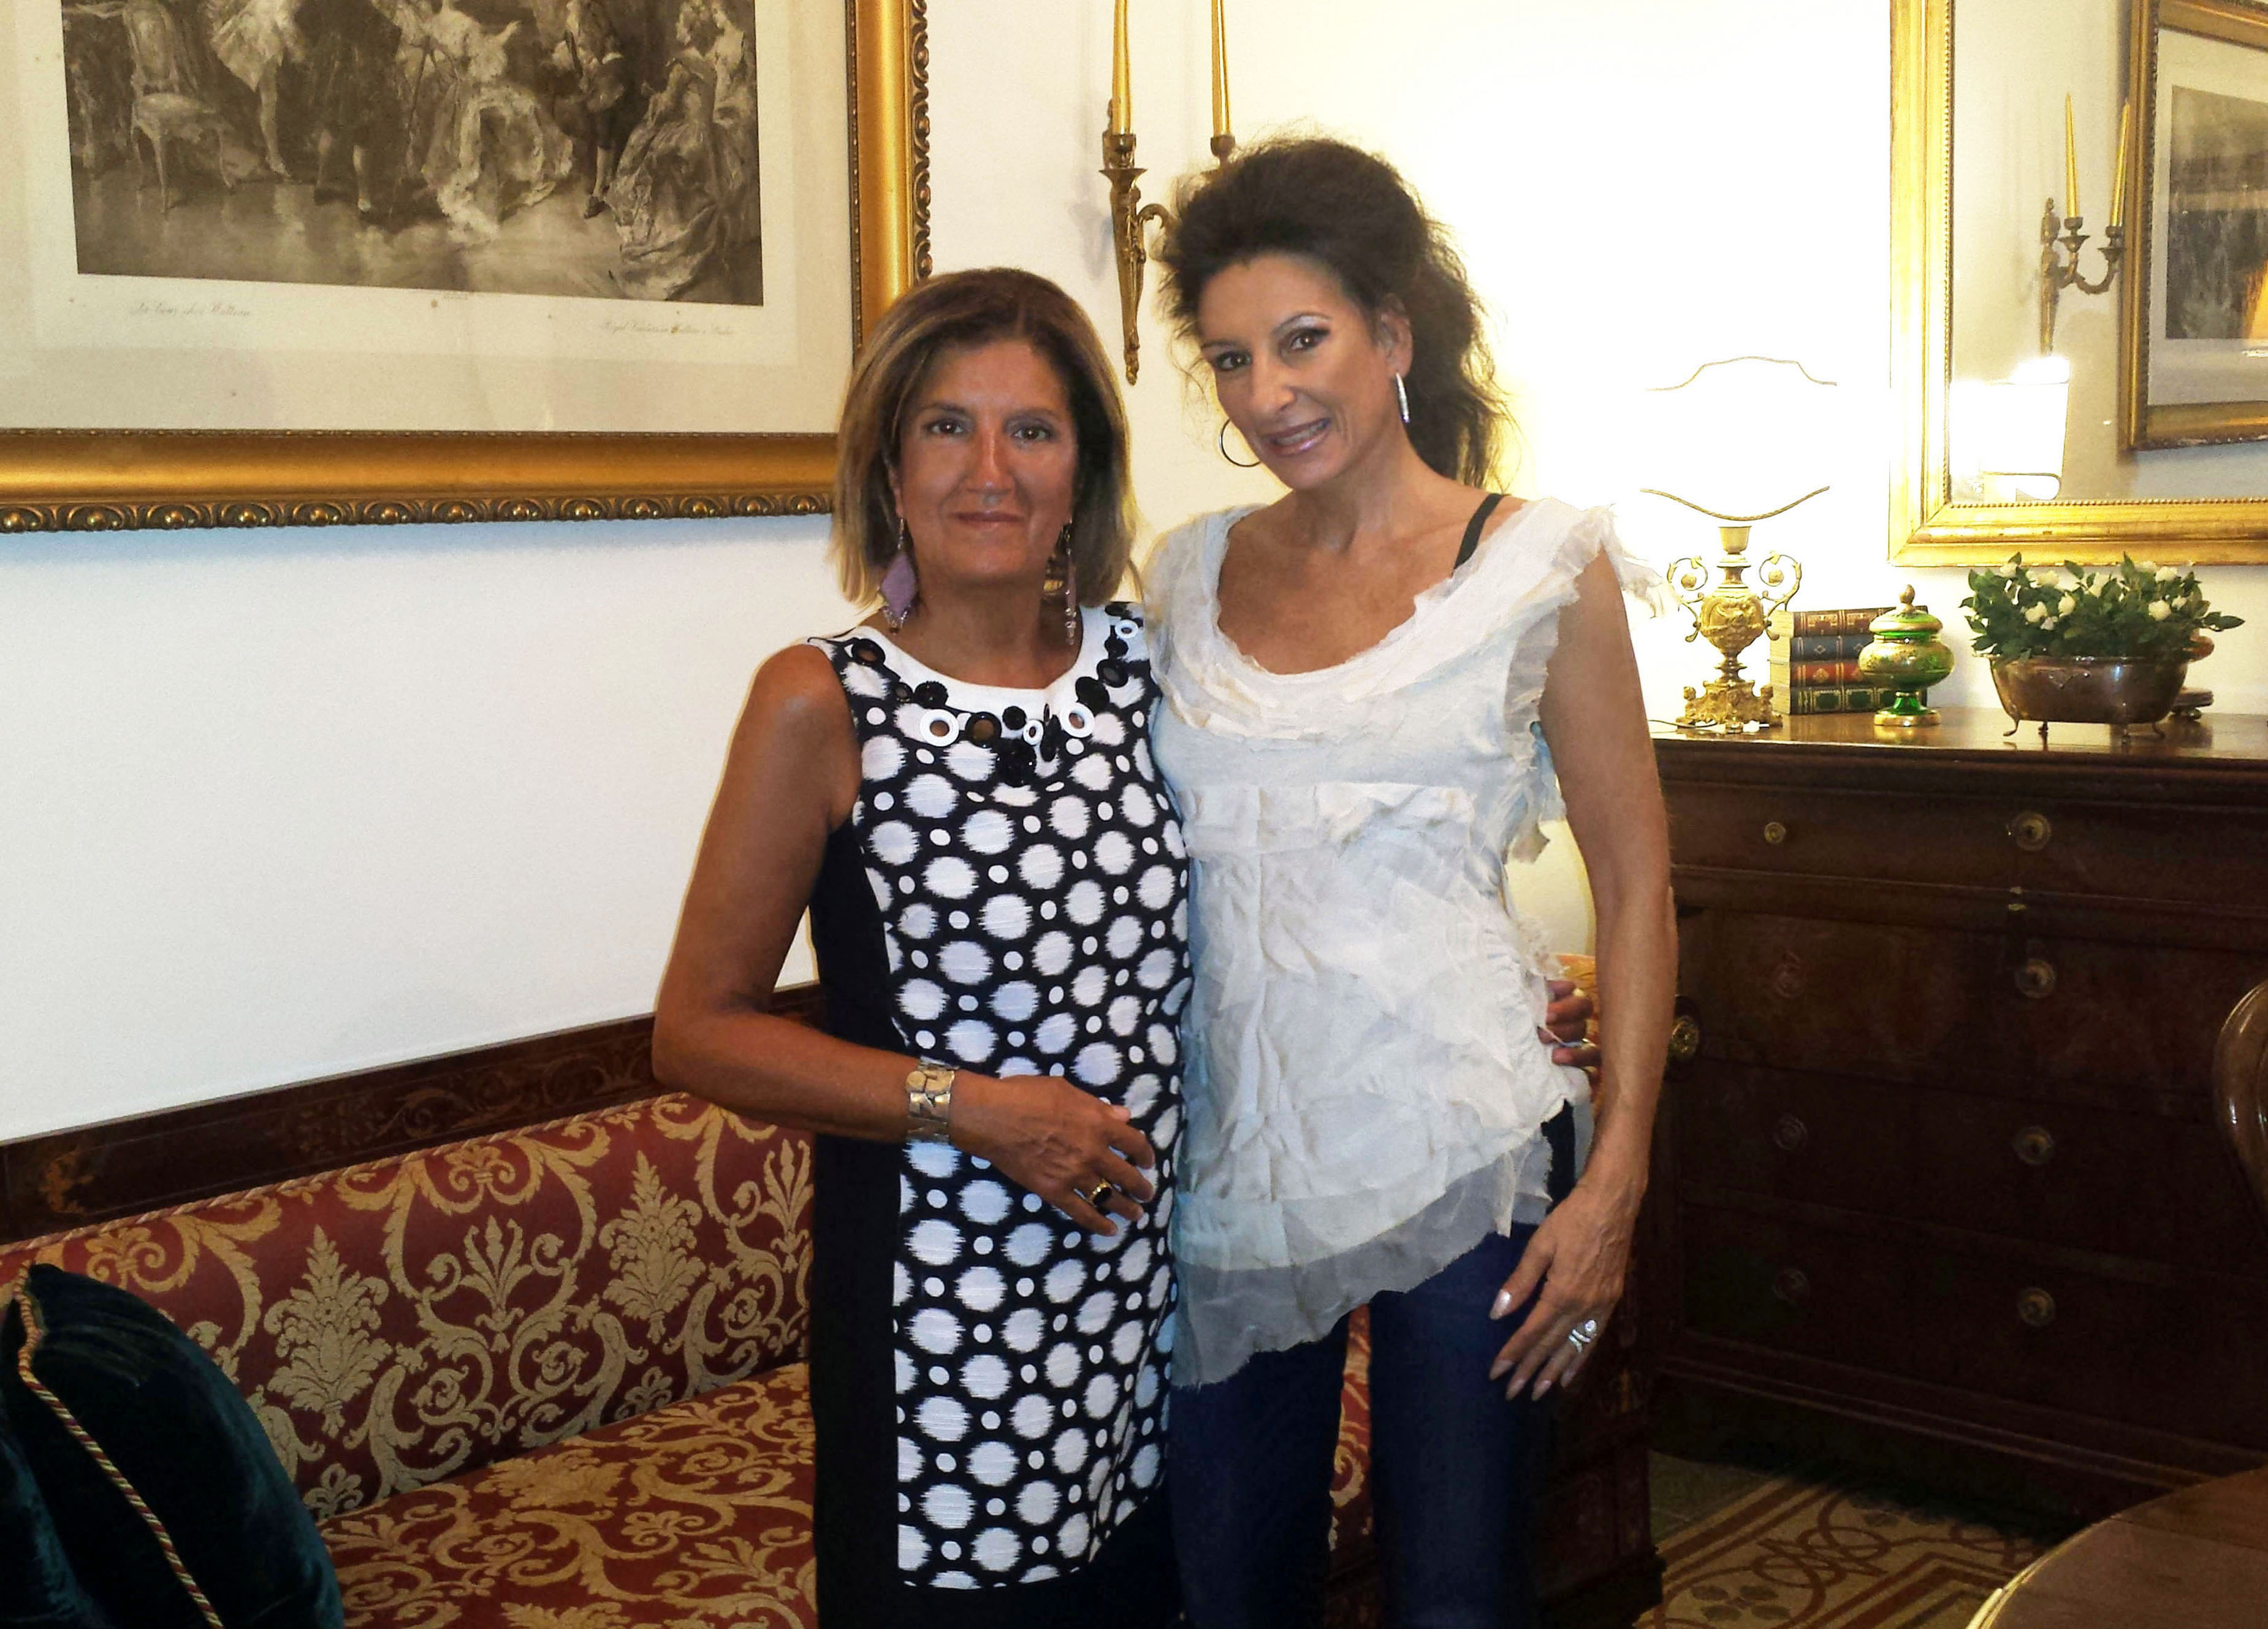 Lucia Aliberti with the journalist and writer Cinzia Alibrandi⚘Interview⚘"Assodigitale"⚘Magazine Online⚘Family home⚘Sicily⚘:http://www.luciaaliberti.it #luciaaliberti #cinziaalibrandi #assodigitale #magazineonline #interview #familyhome #sicily